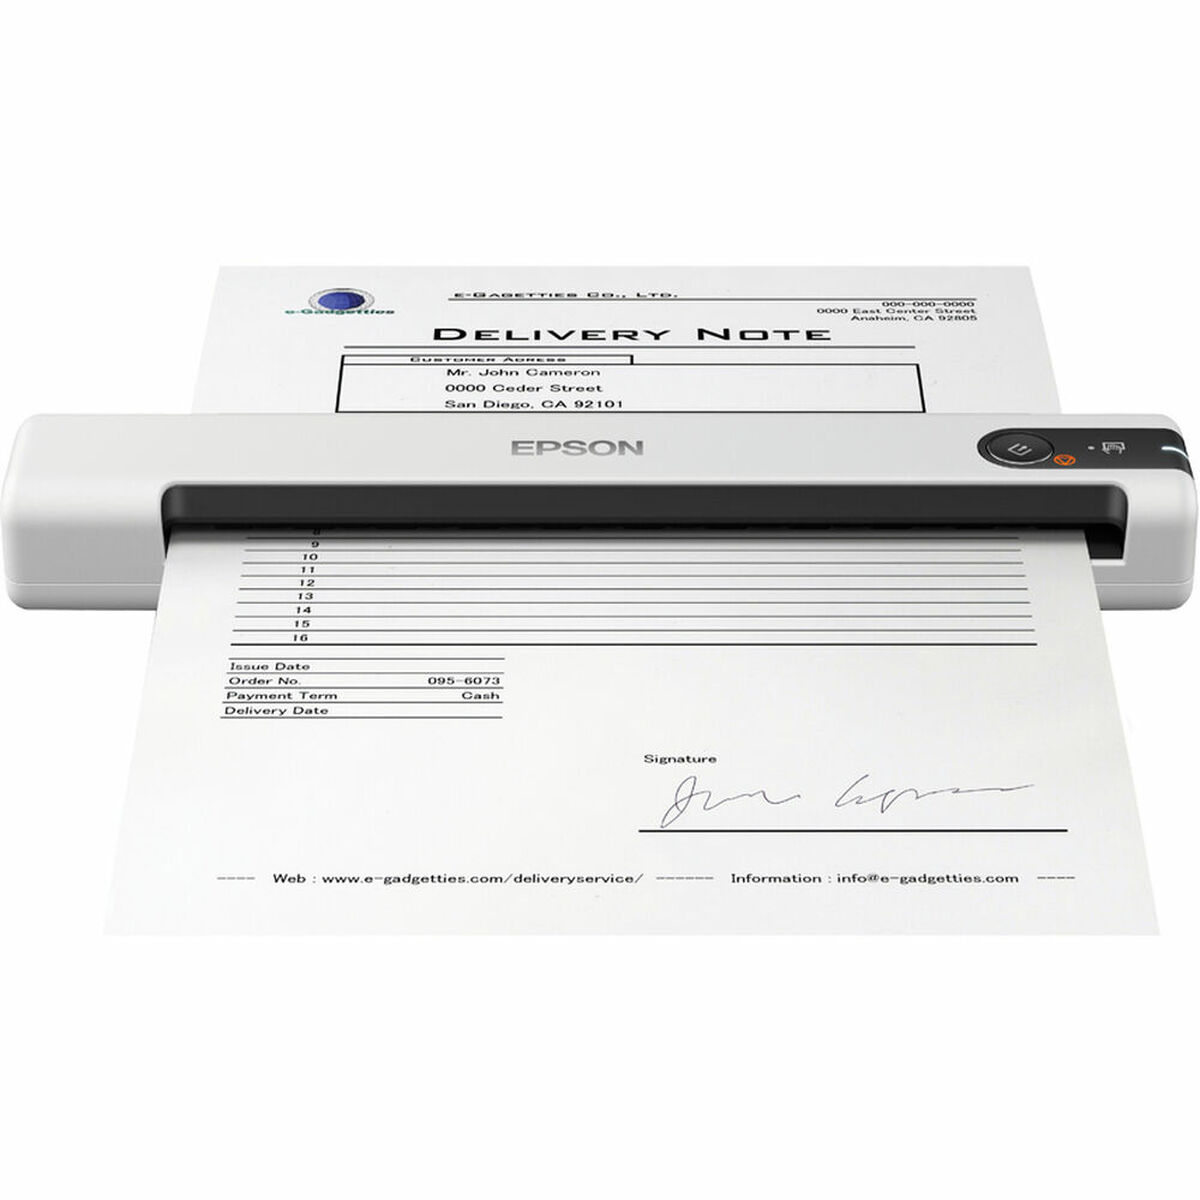 Portable Scanner Epson B11B252402 600 dpi USB 2.0